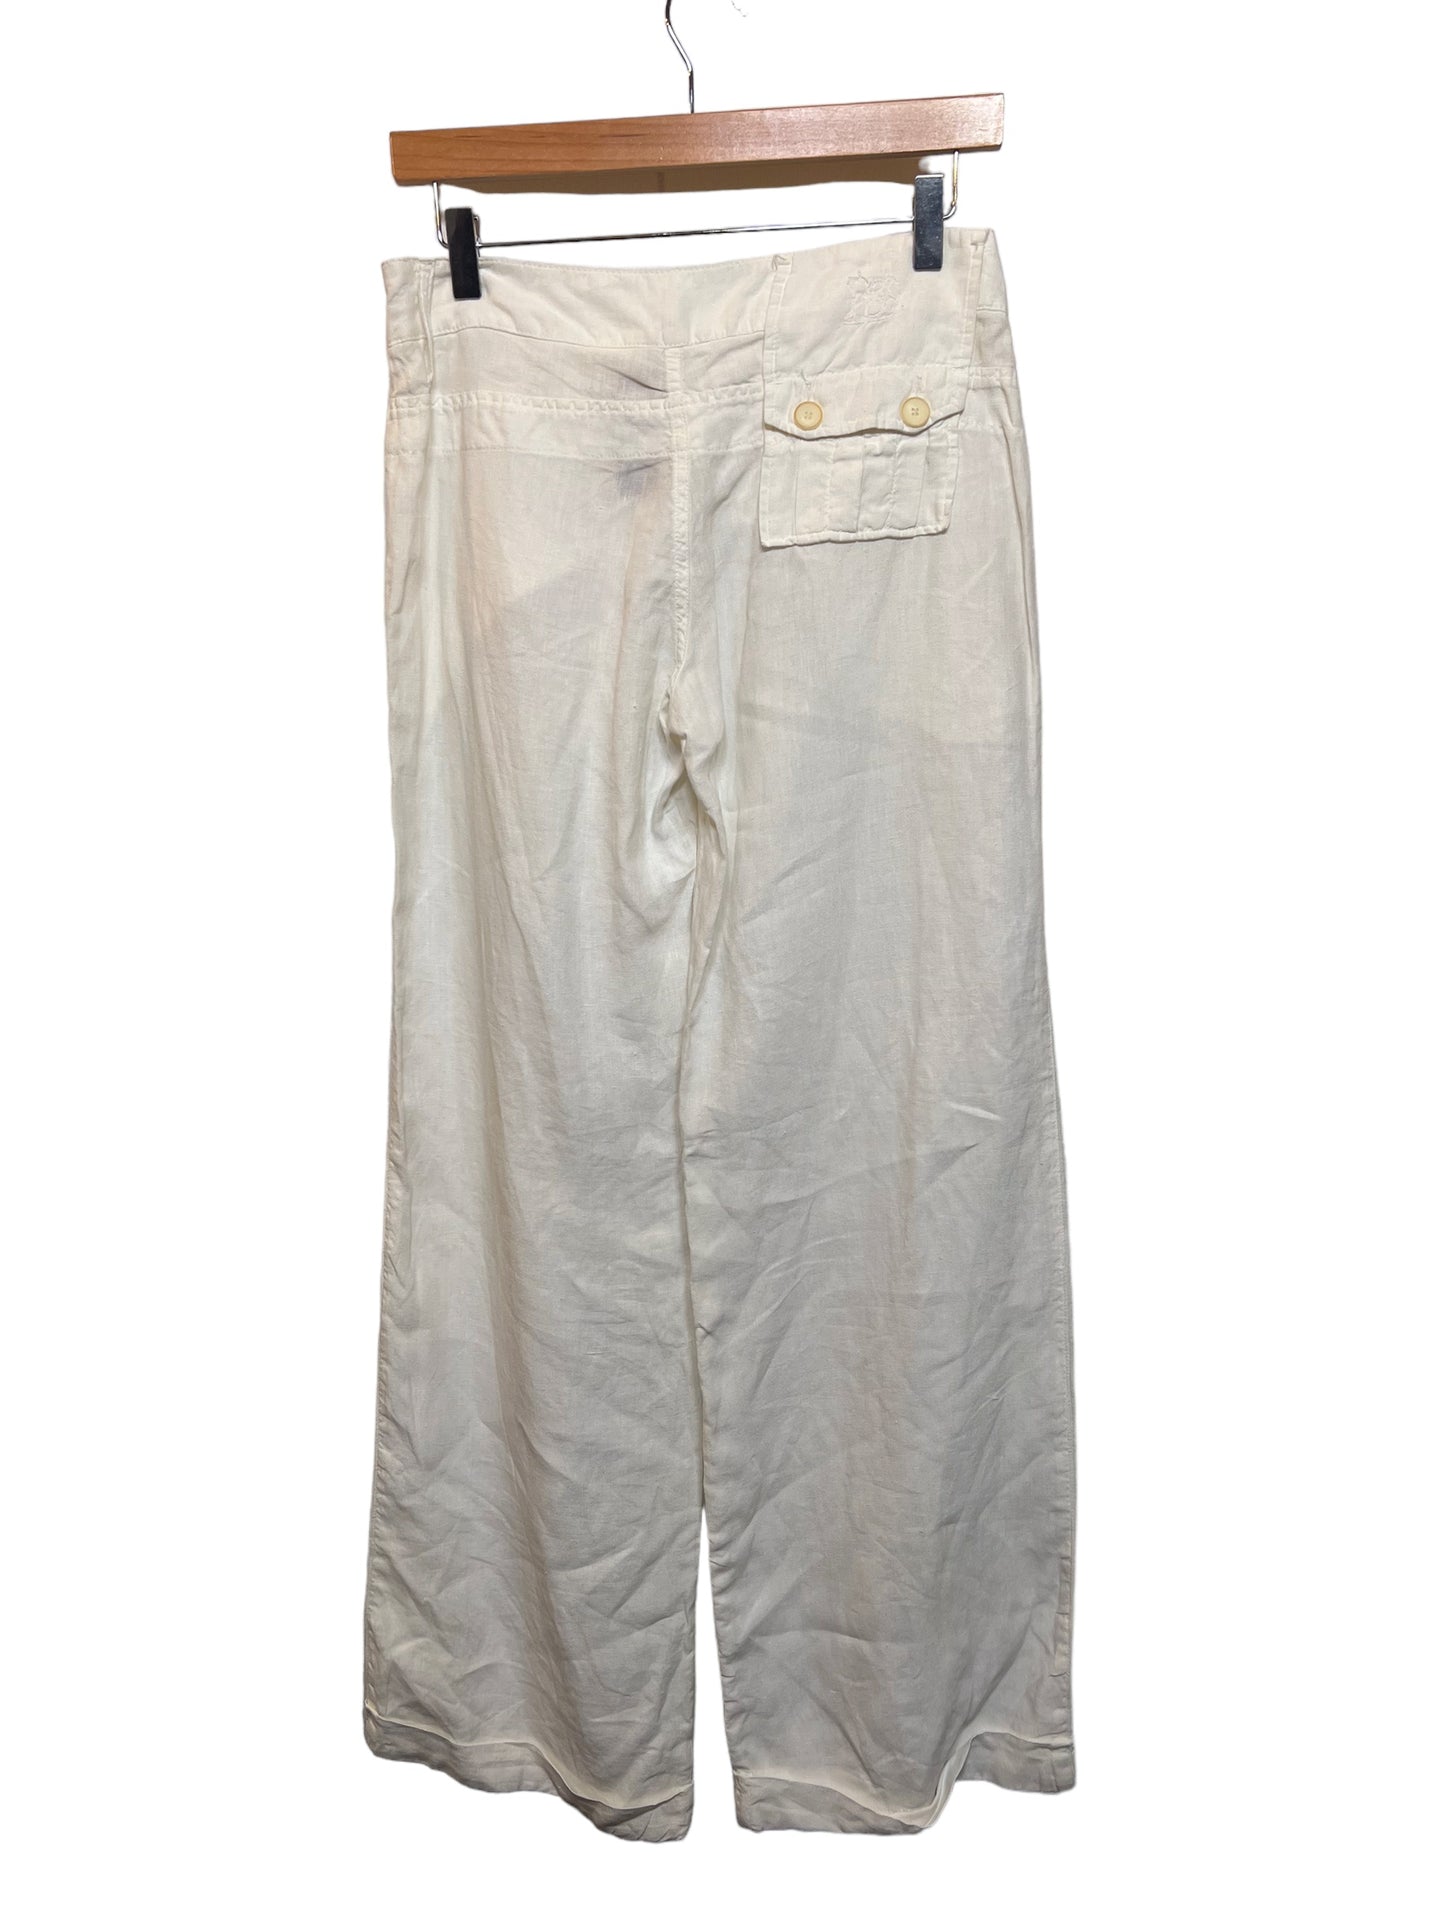 Women’s White Linen Trousers (Size W30)